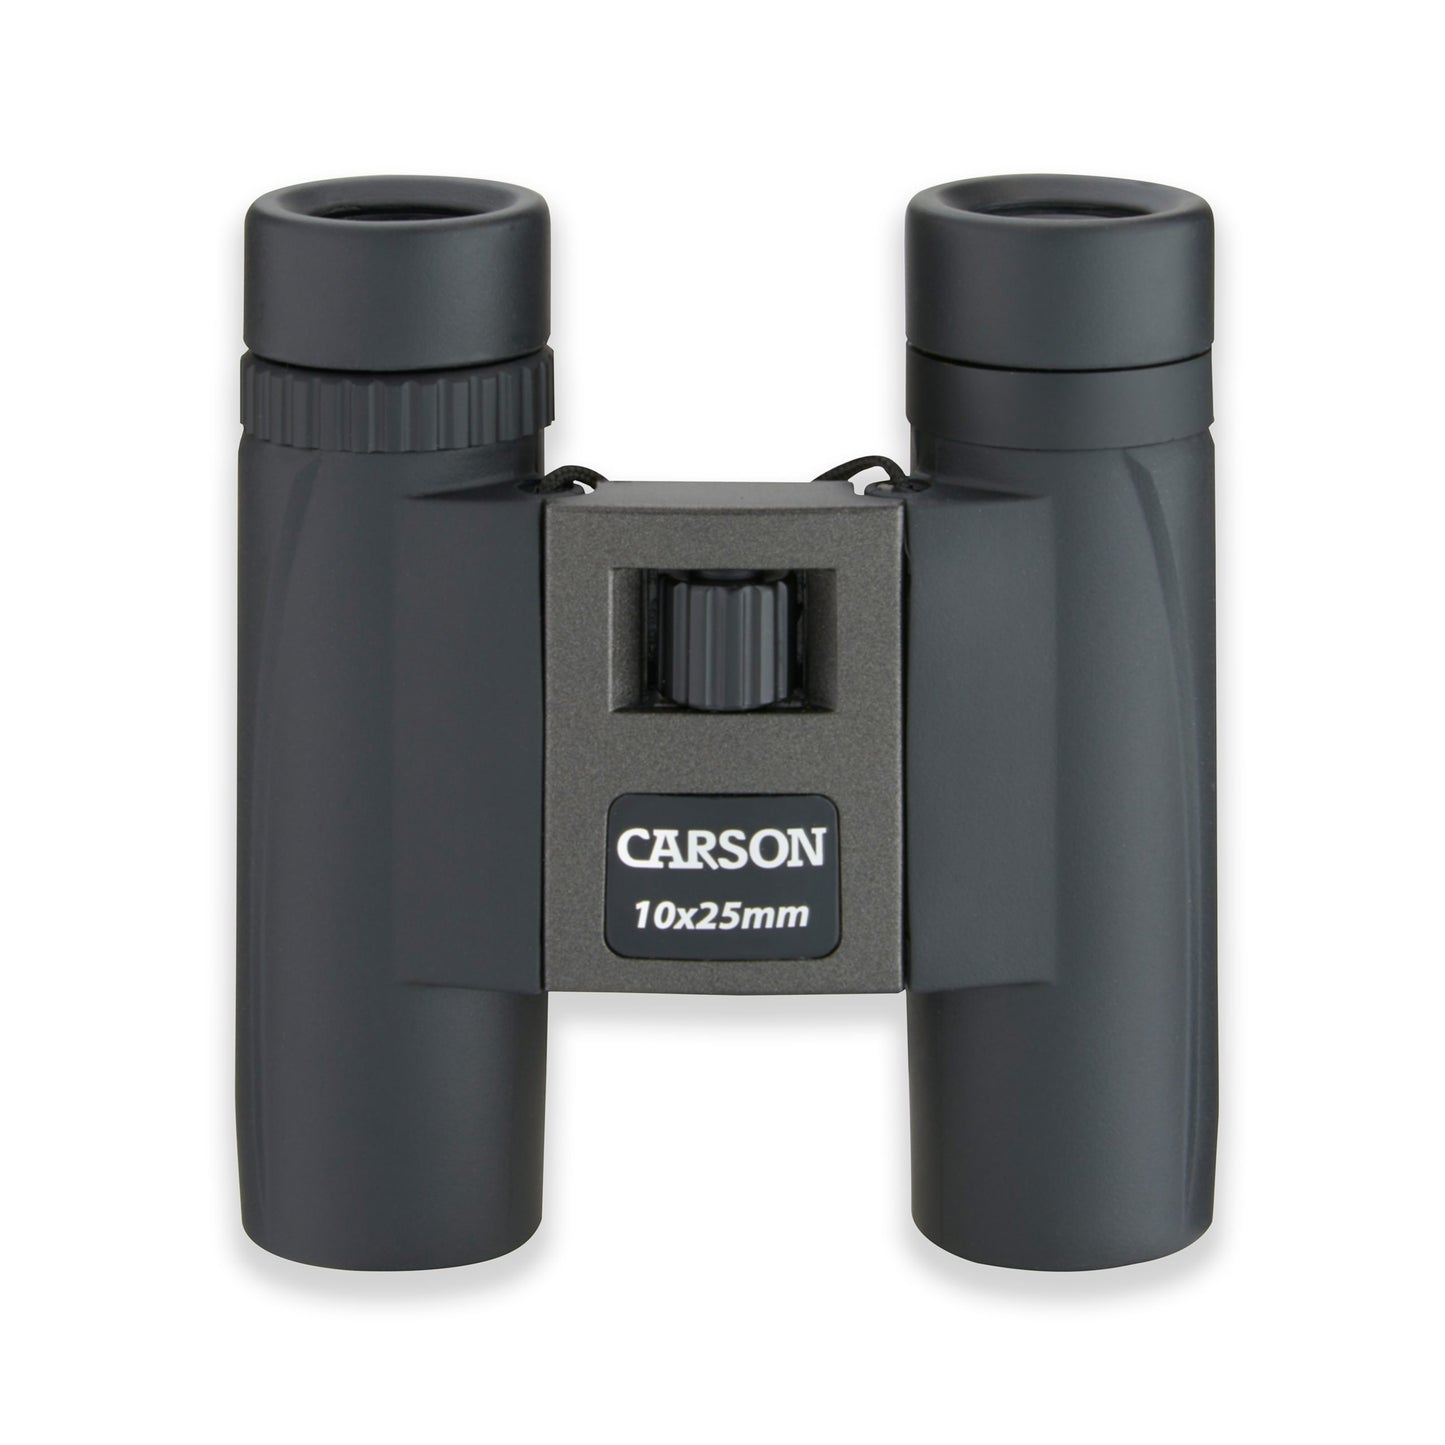 Carson TrailMaxx 10x25mm Compact Lightweight Binoculars TM-025